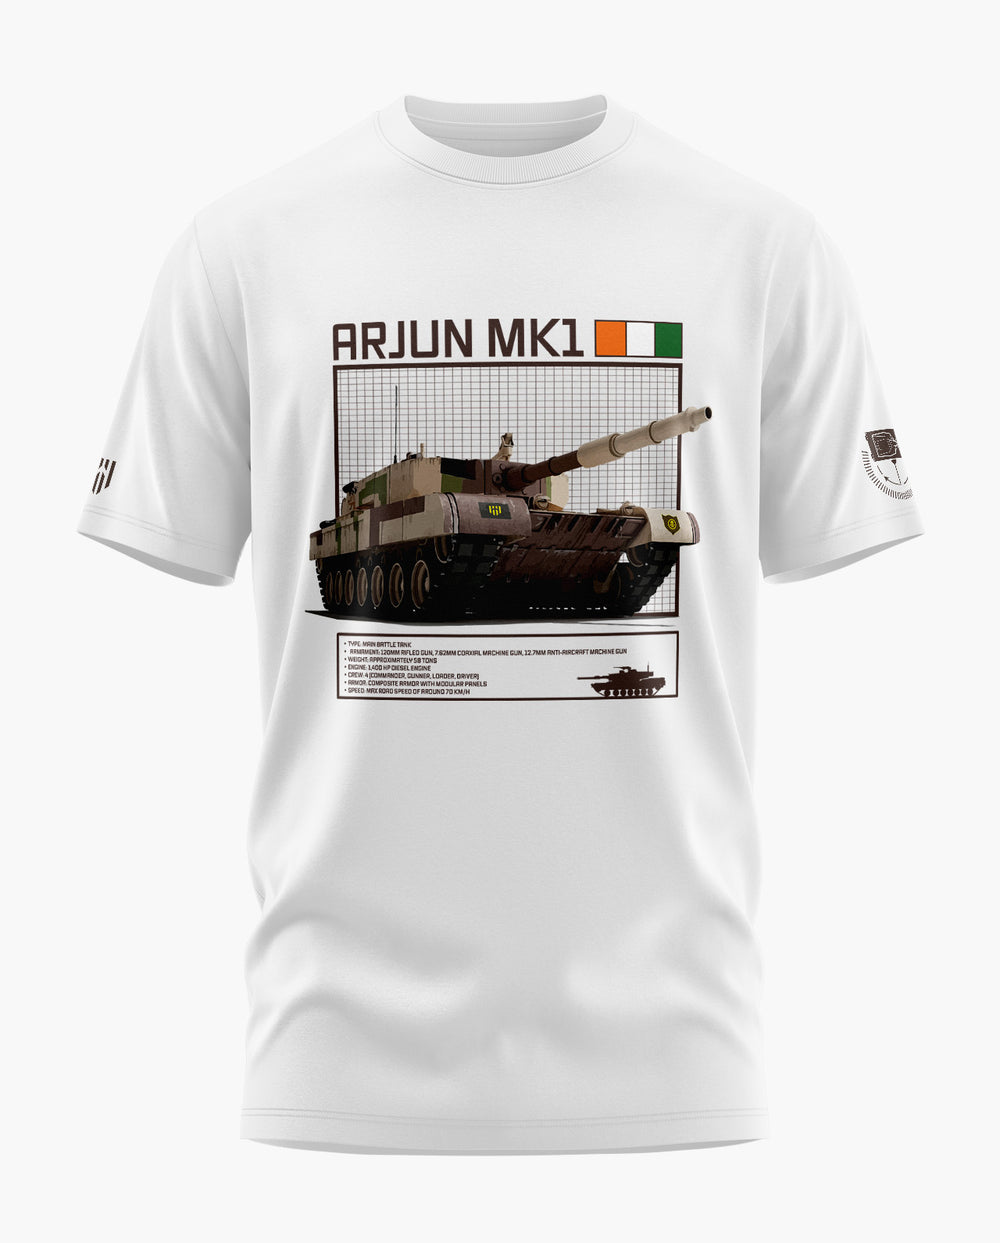 ARJUN MK1 MBT ULTIMATE T-Shirt - Aero Armour